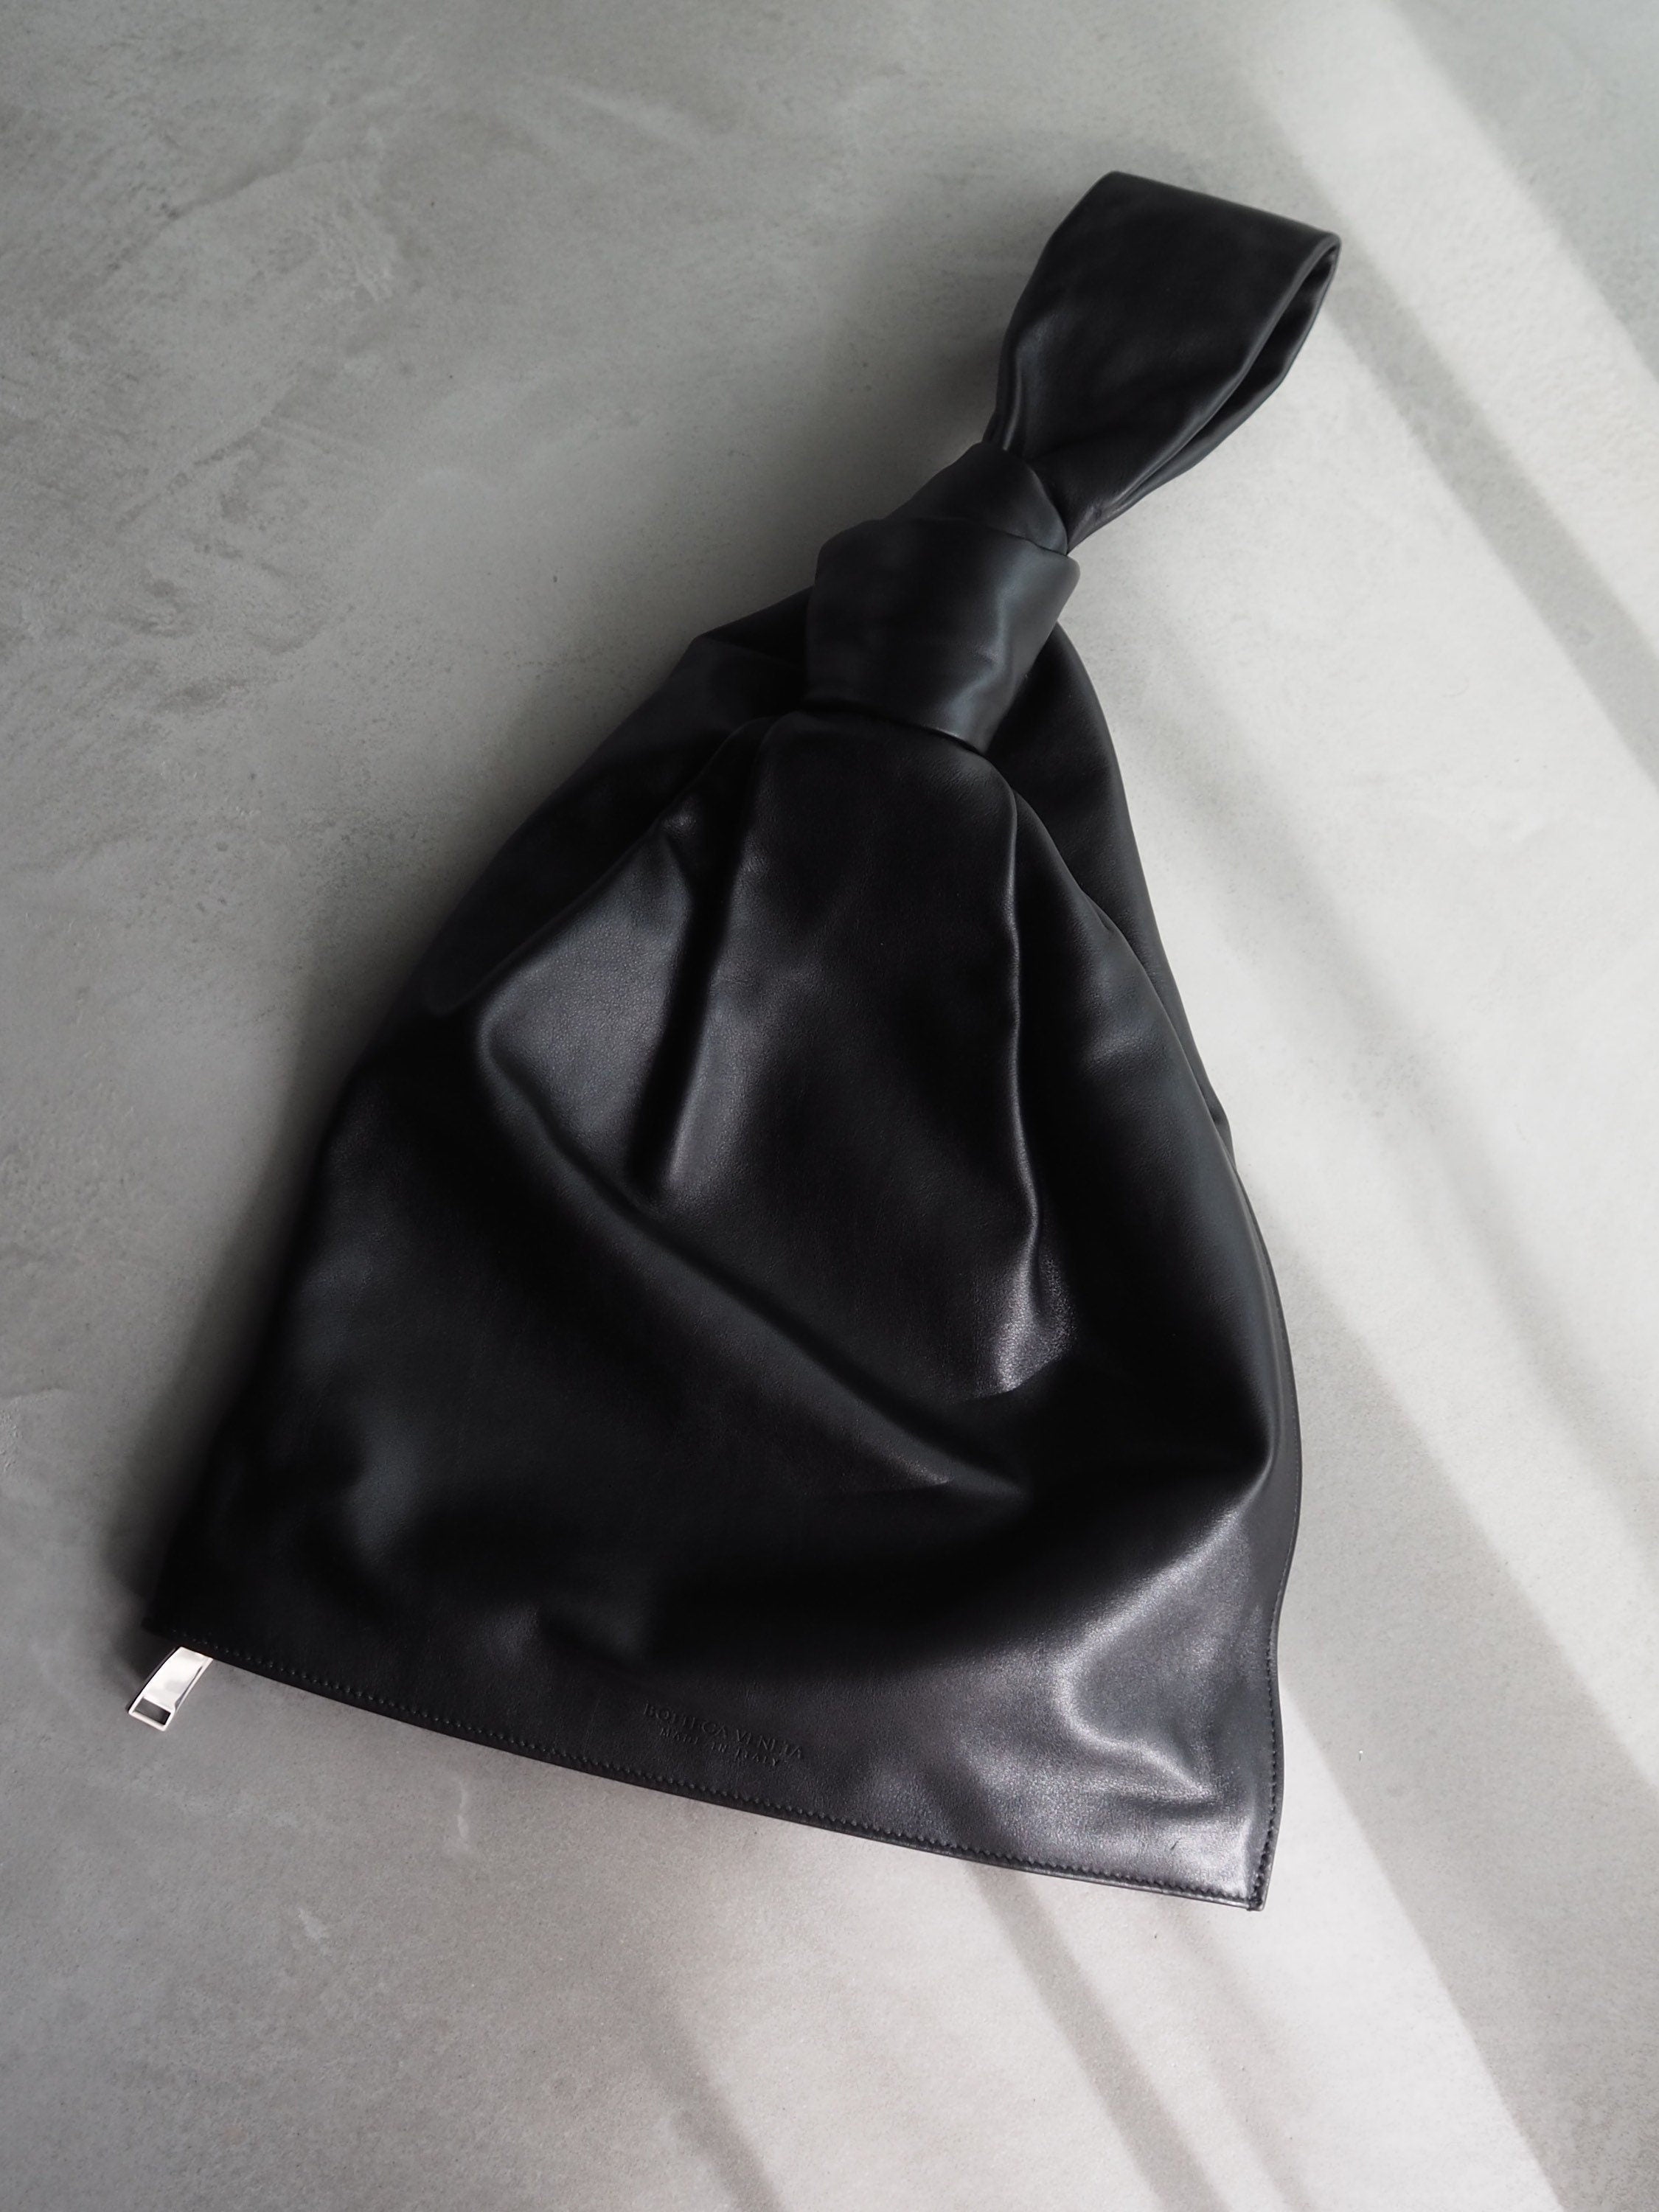 BOTTEGA VENETA Twist Clutch Bag Hand bag Leather Black Vintage Authentic